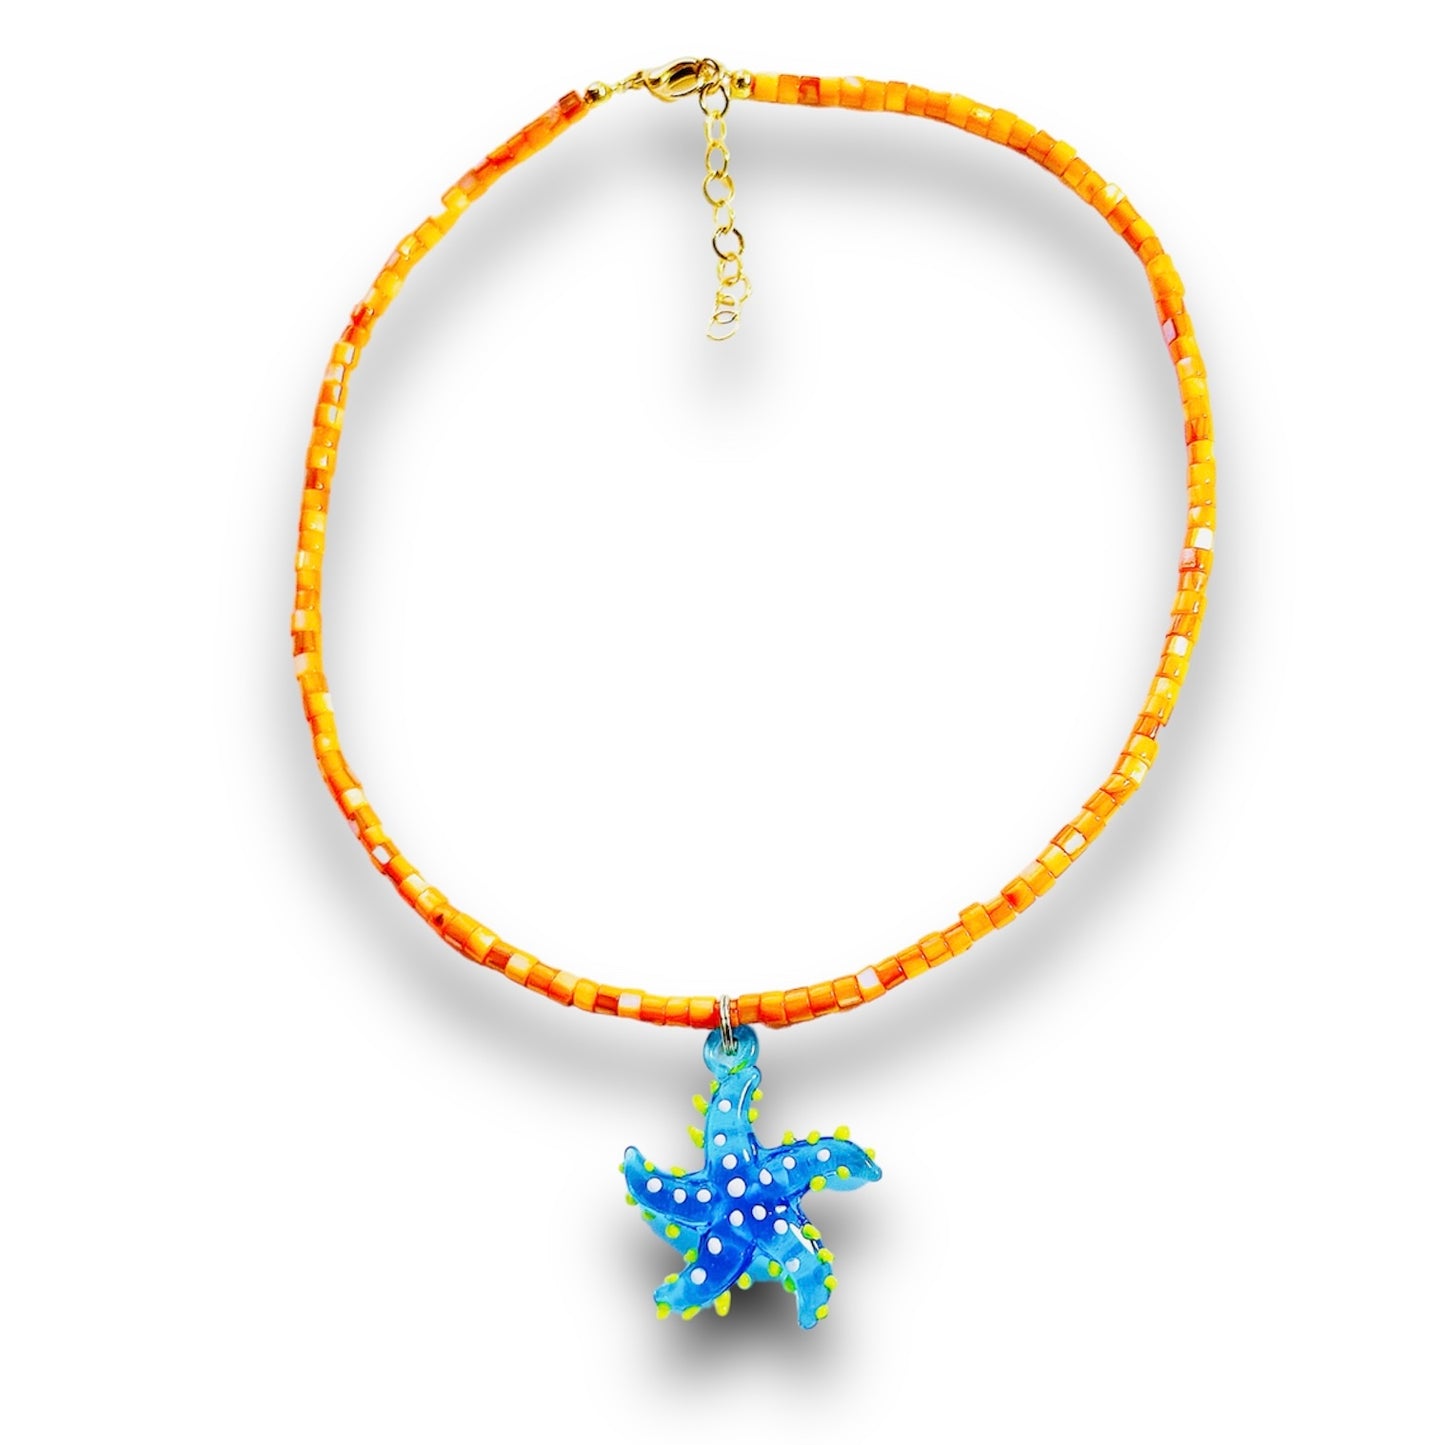 Blue Sea Star Necklace